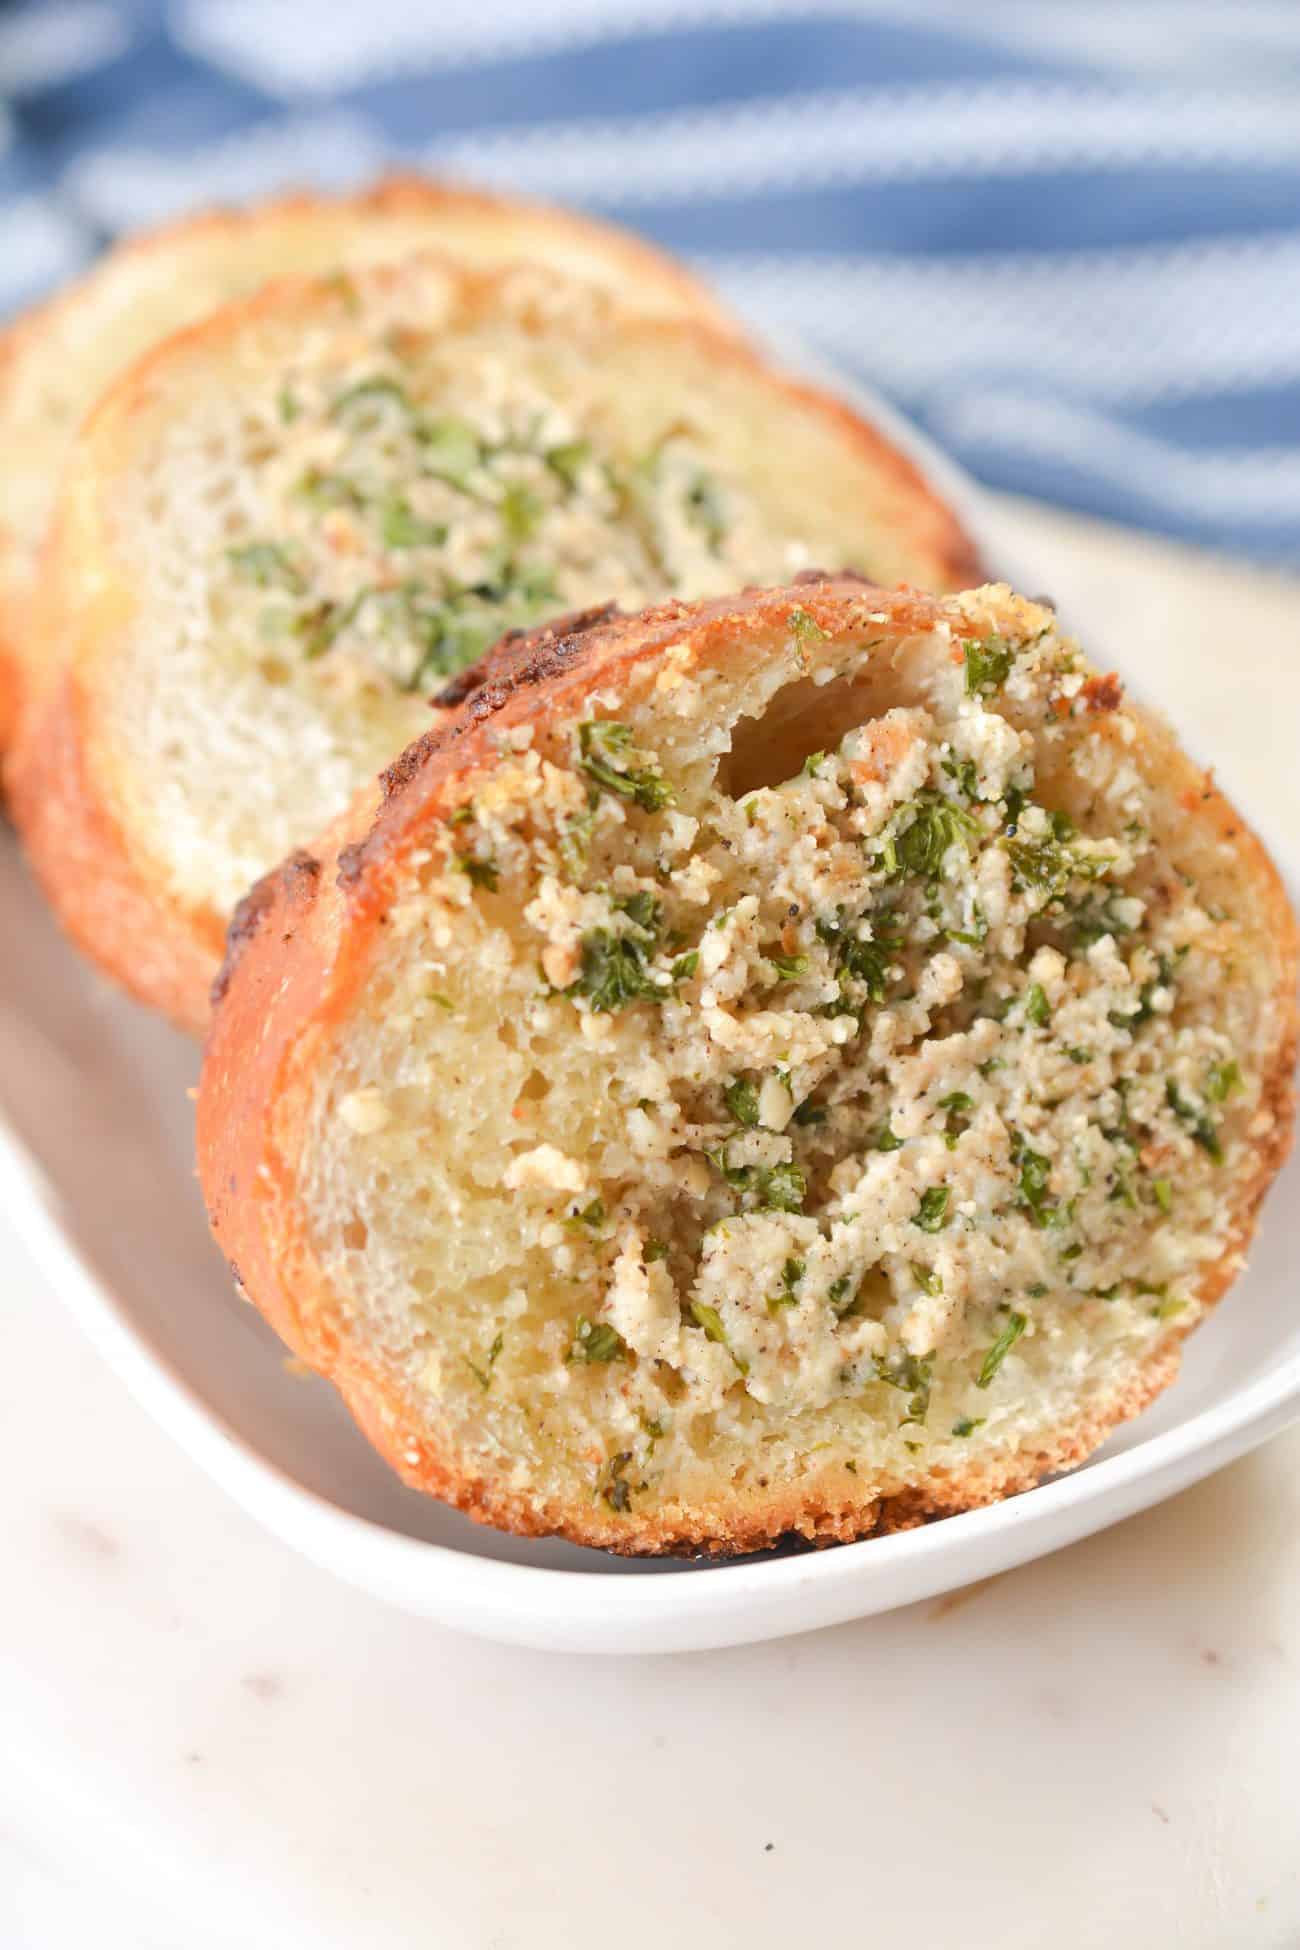  Stuffed garlic bread